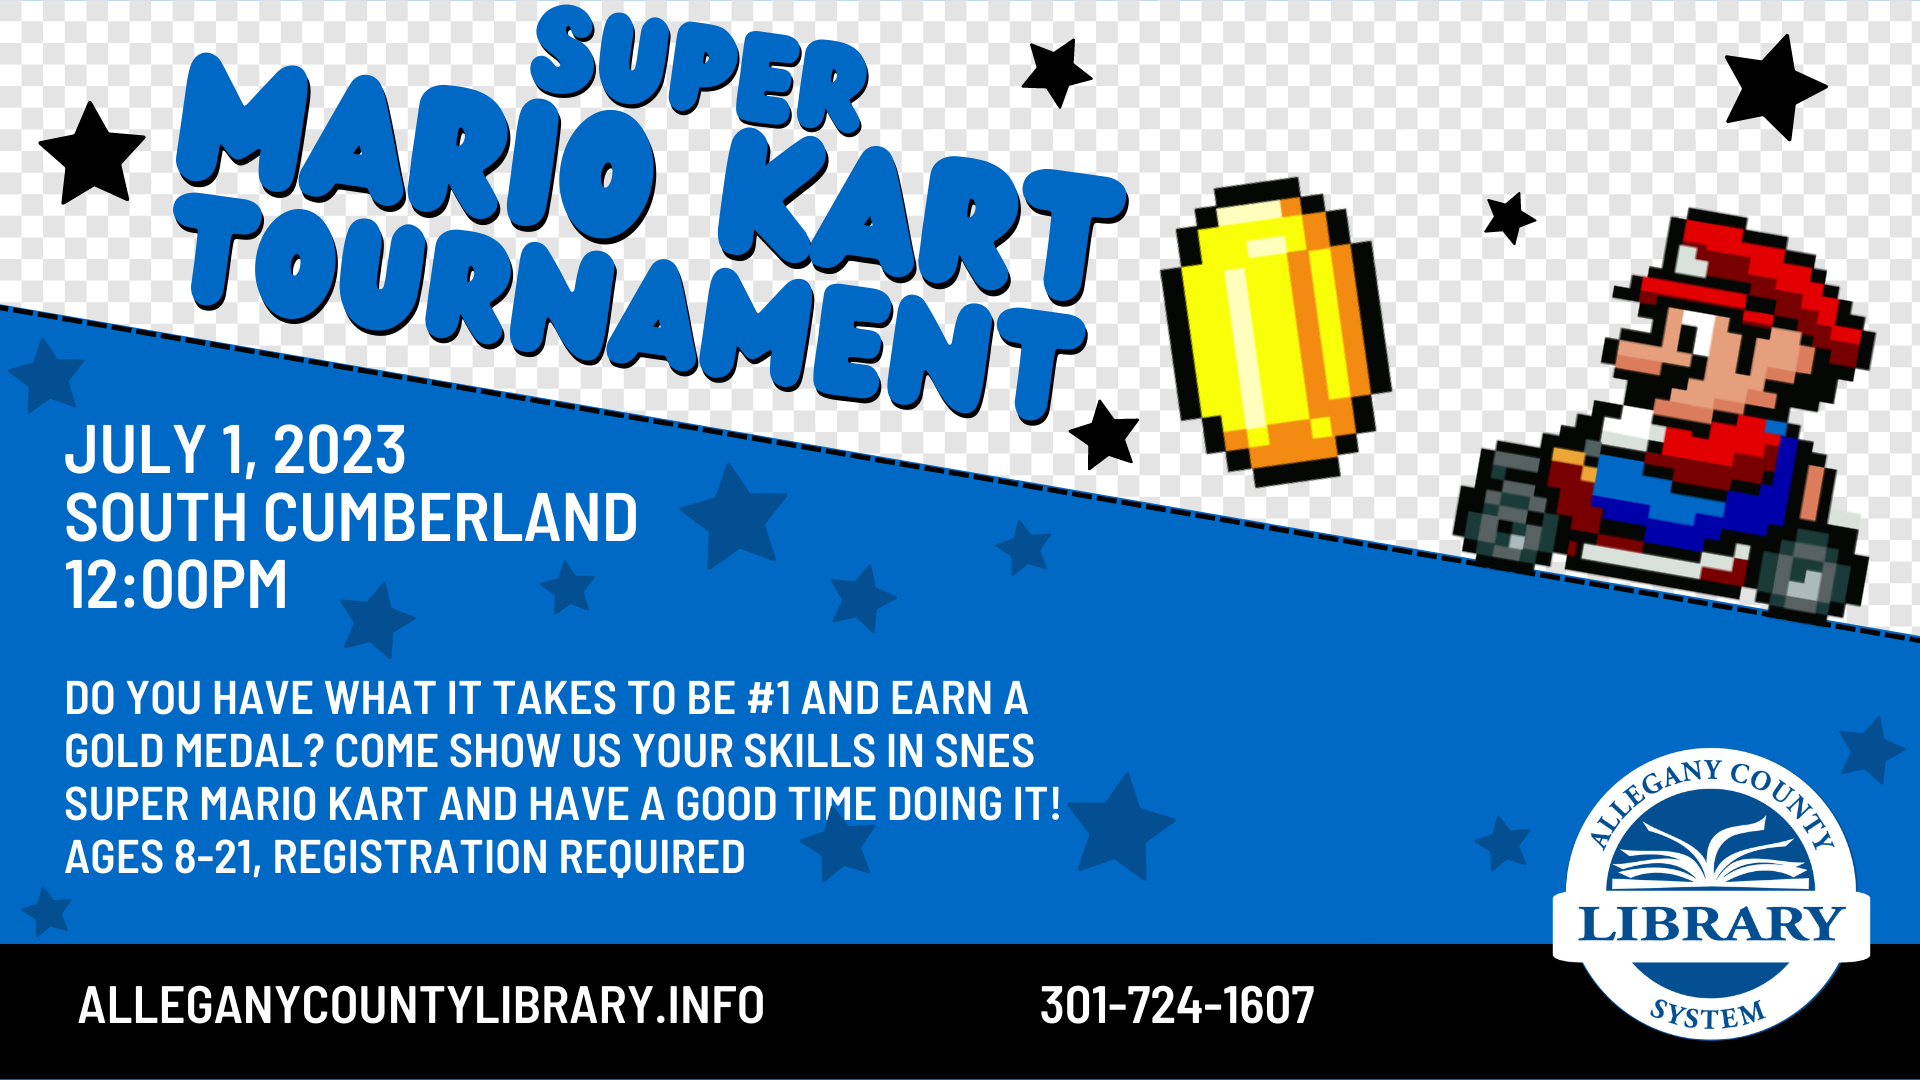 super mario kart tournament event details